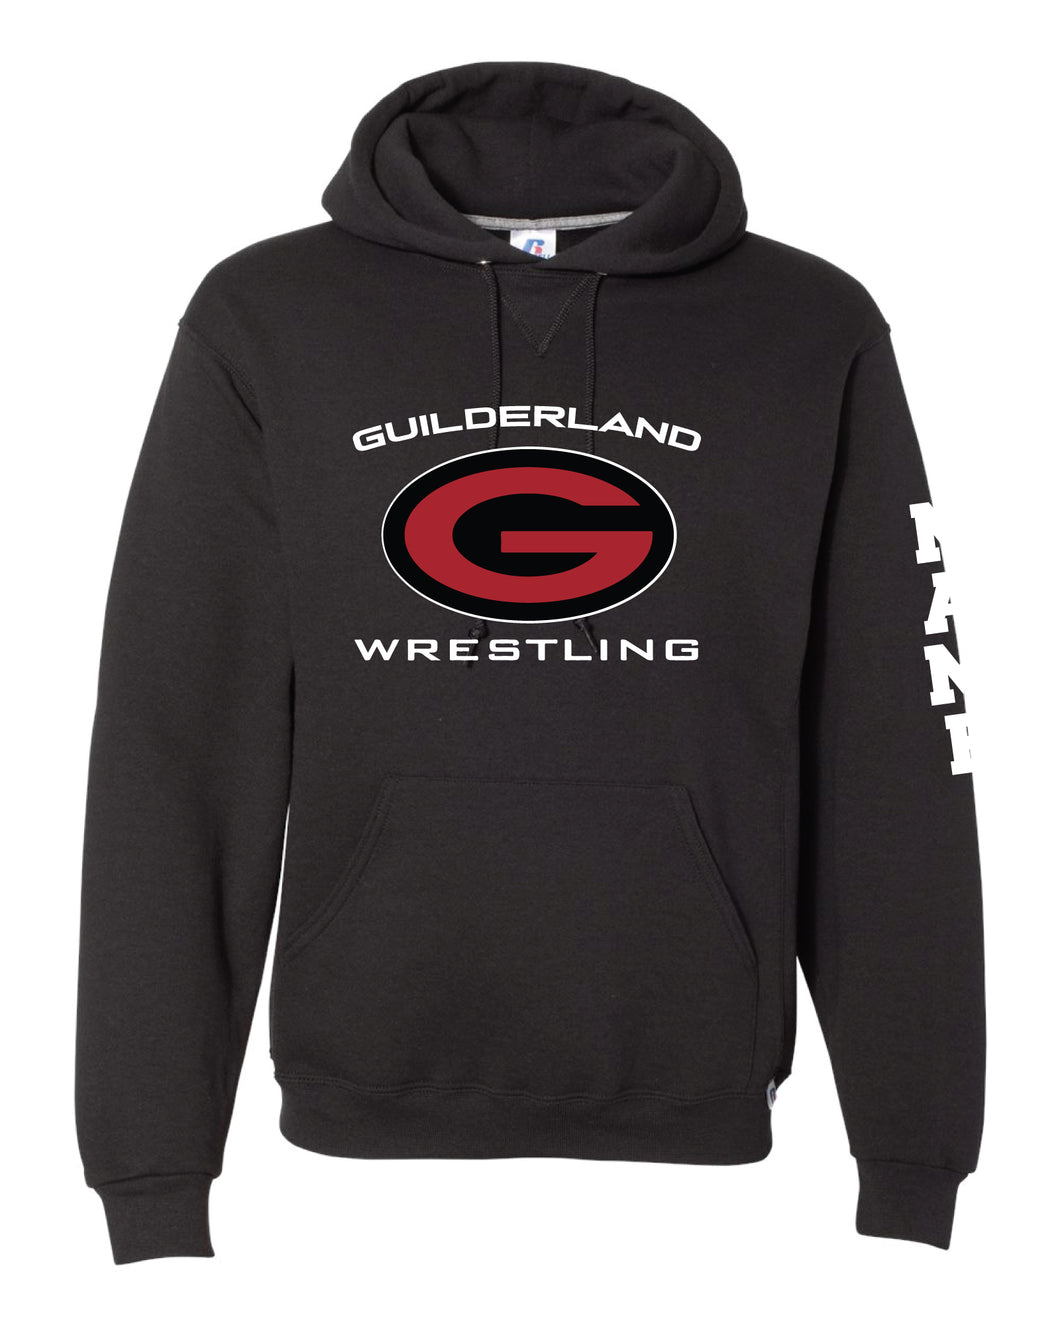 Guilderland Wrestling Russell Athletic Cotton Hoodie - Black - 5KounT2018